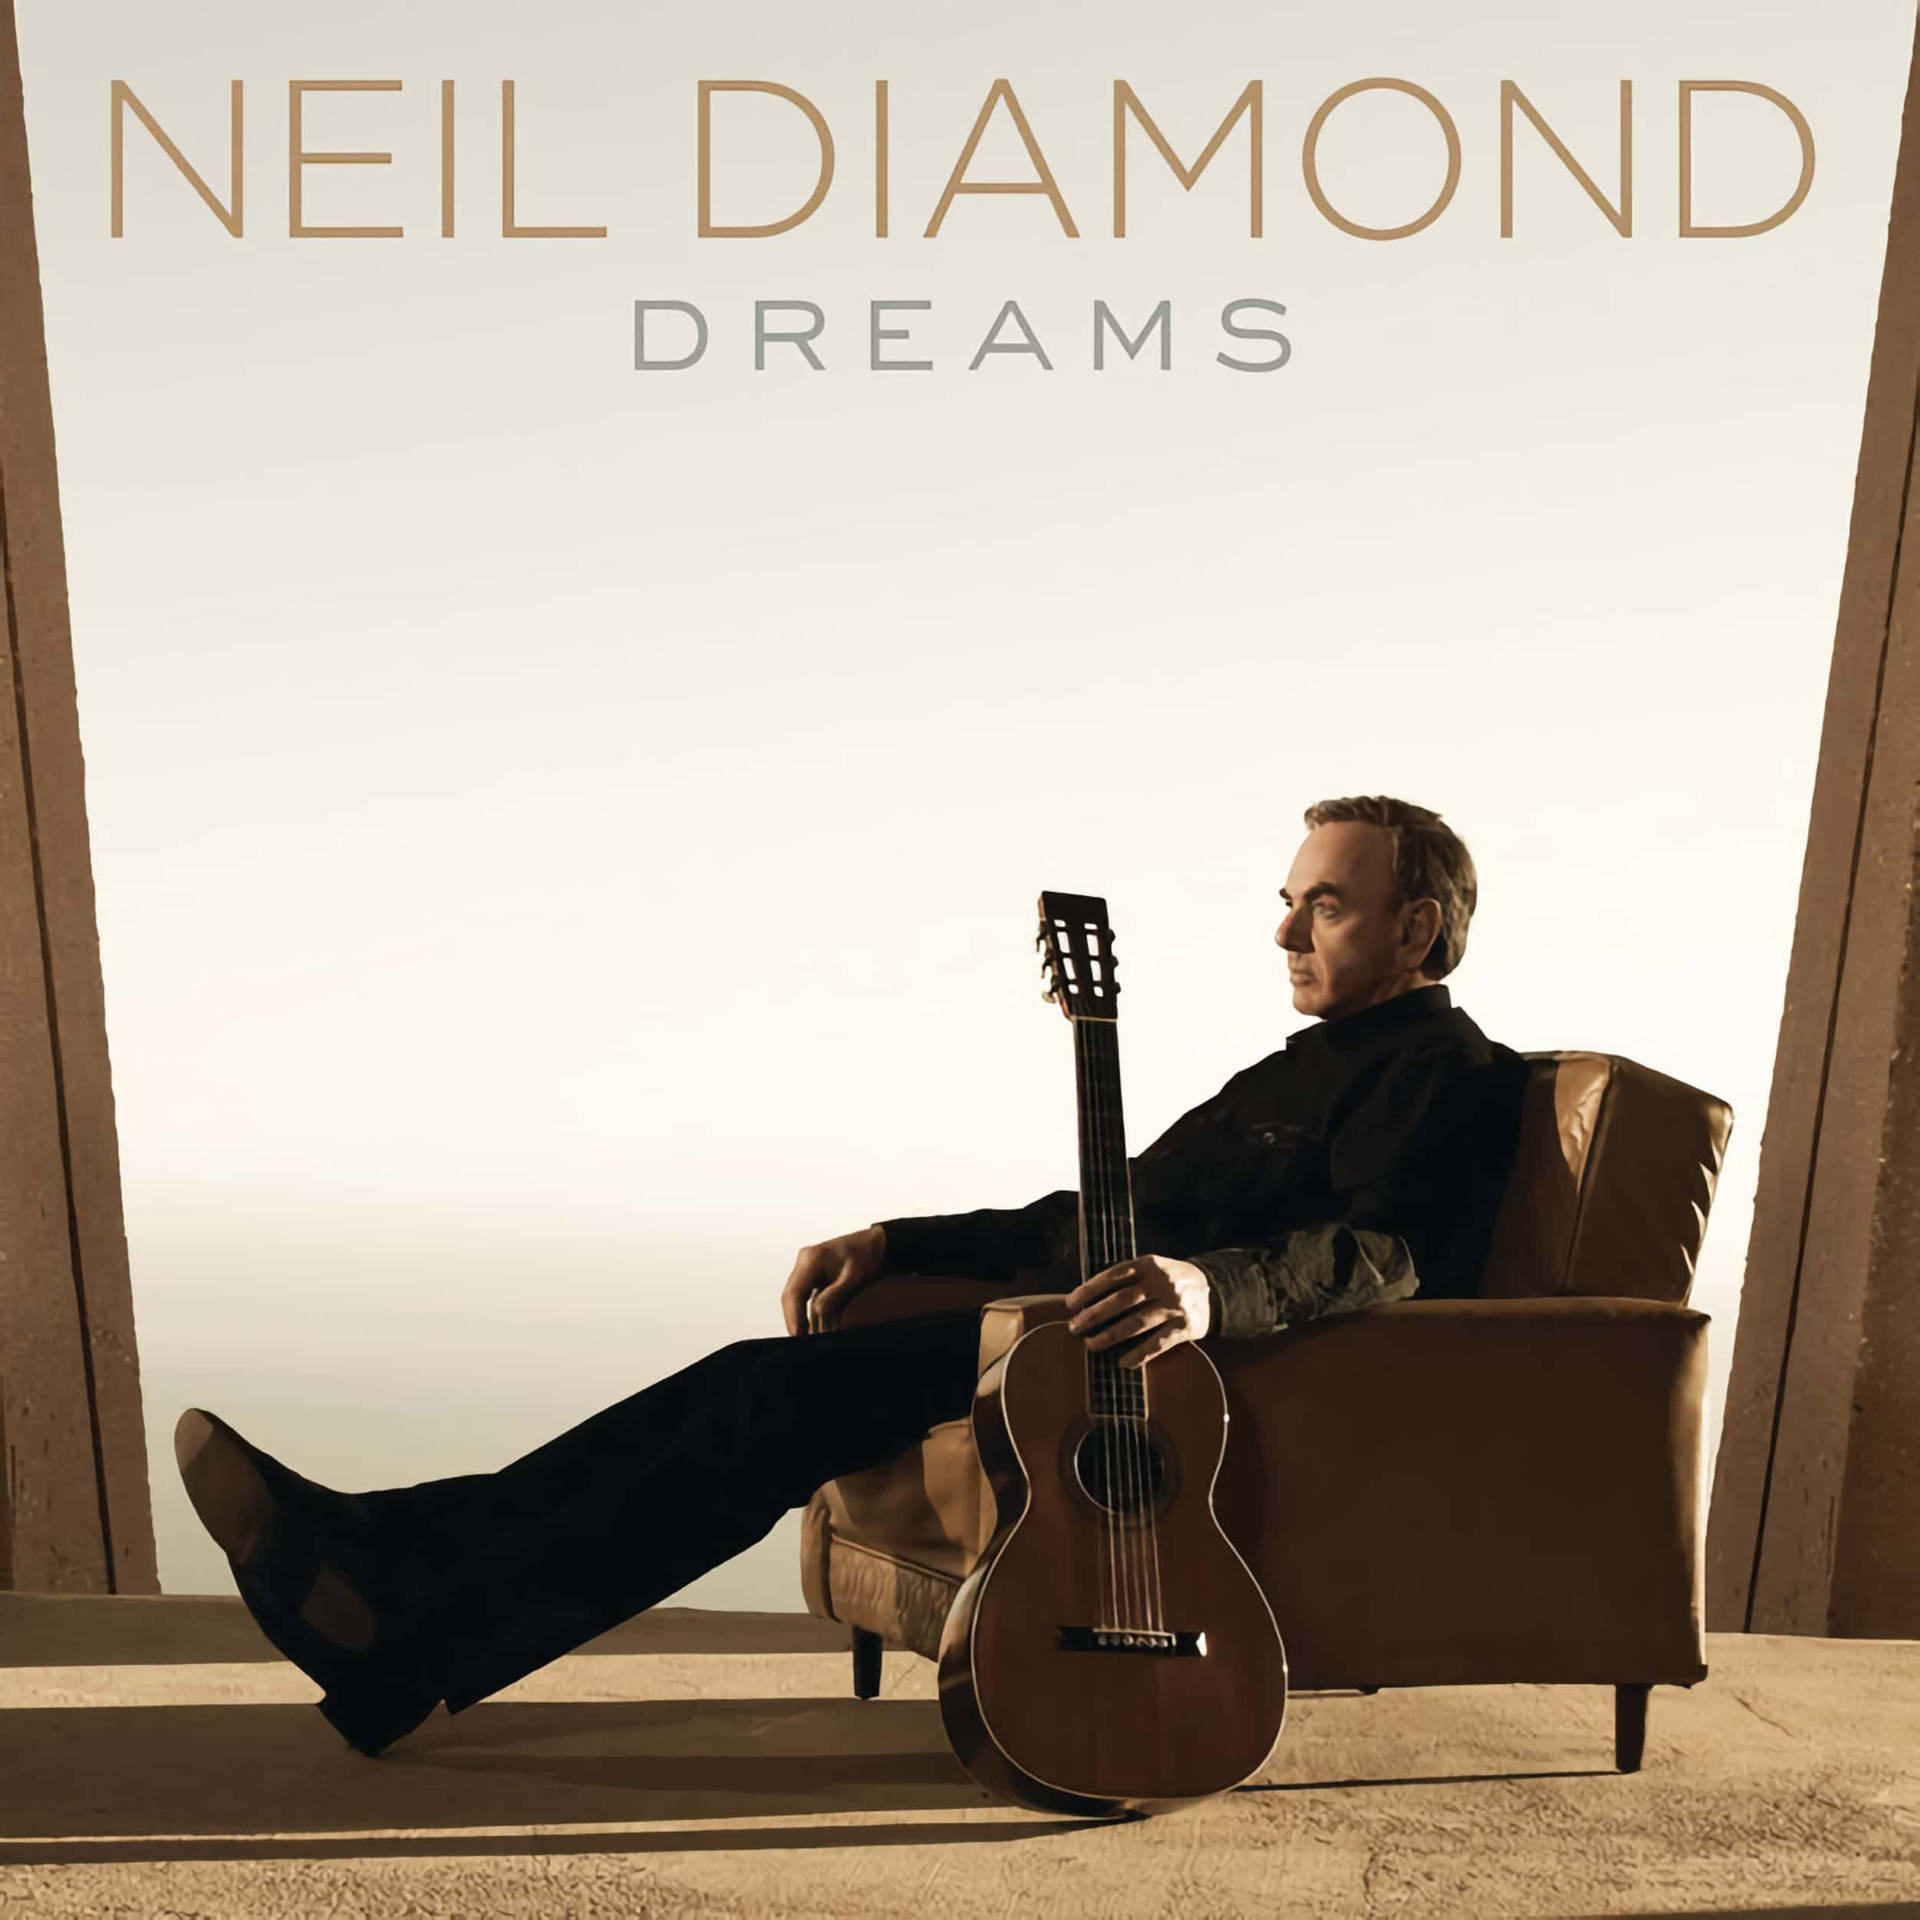 Neildiamond Dreams: Neil Diamond Drömmar. Wallpaper